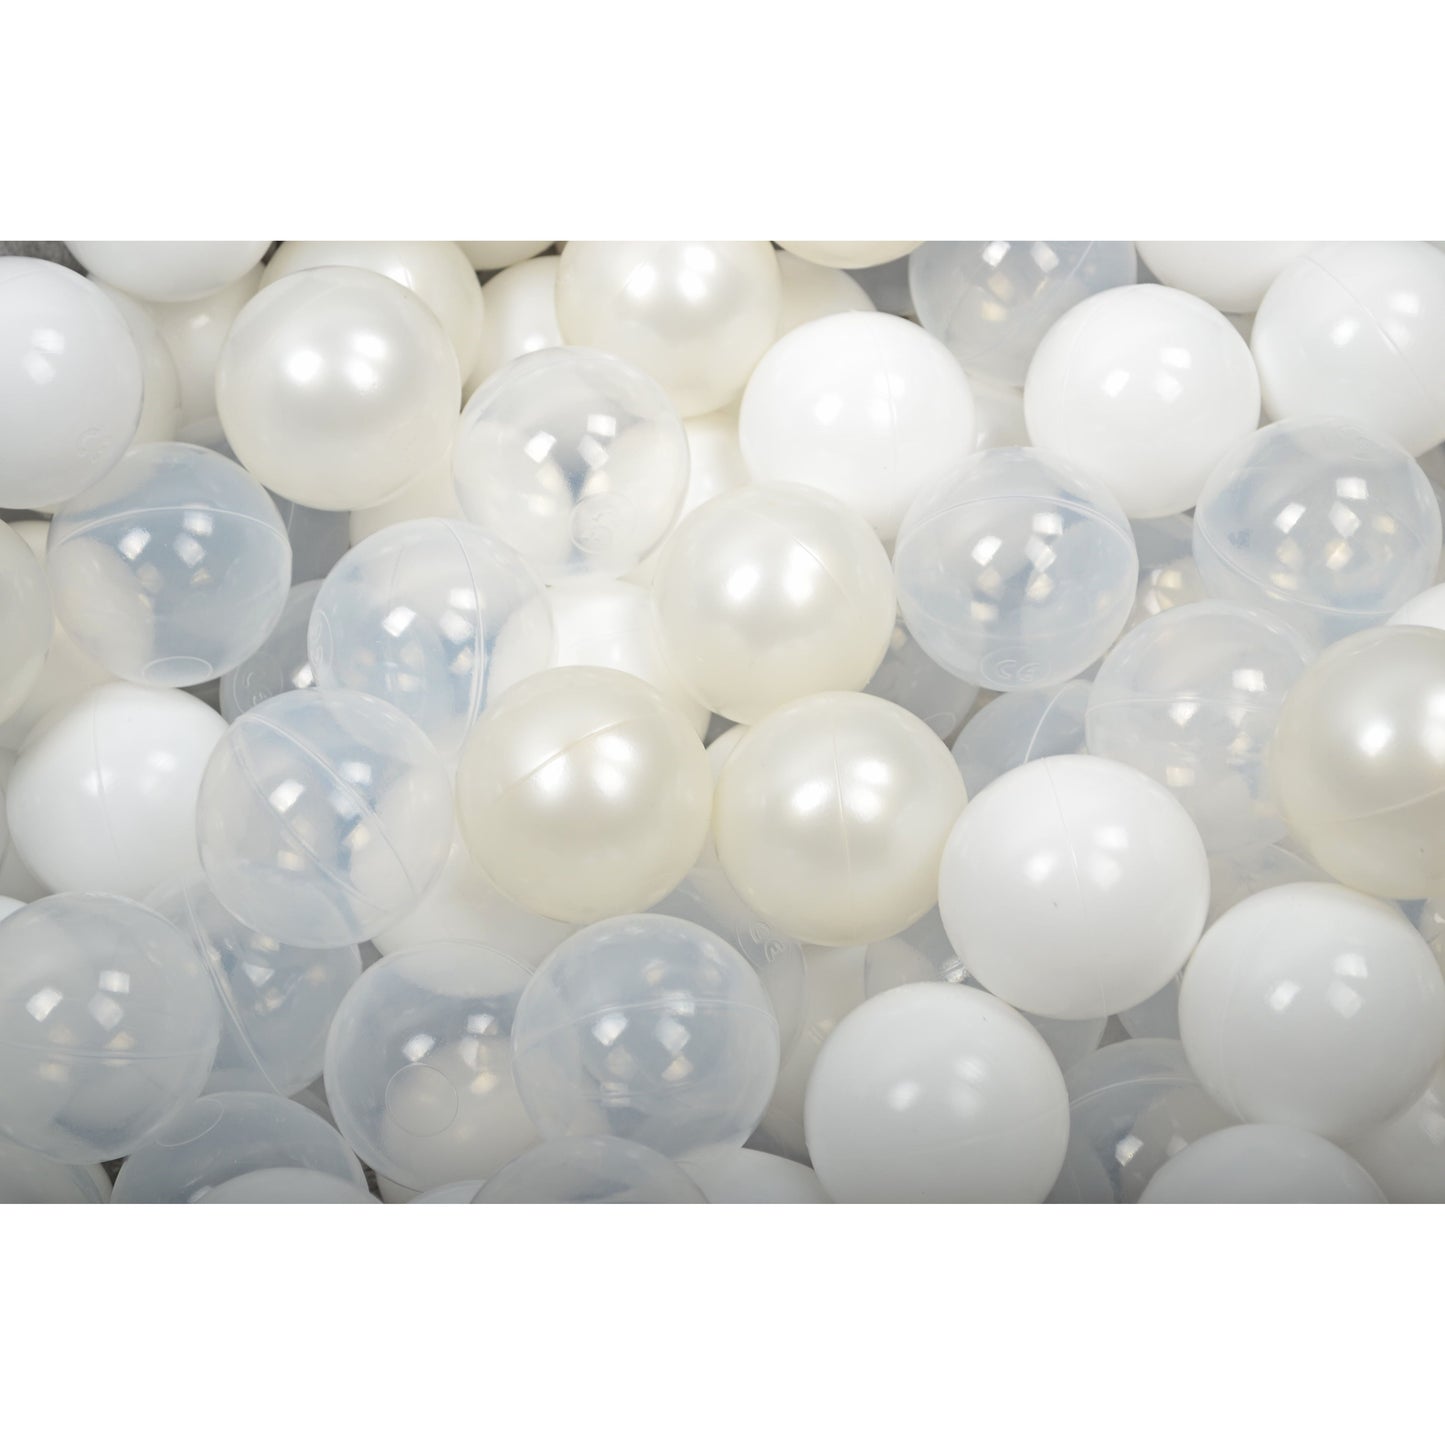 Velvet Corduroy Apricot Round Foam Ball Pit - Select Your Own Balls